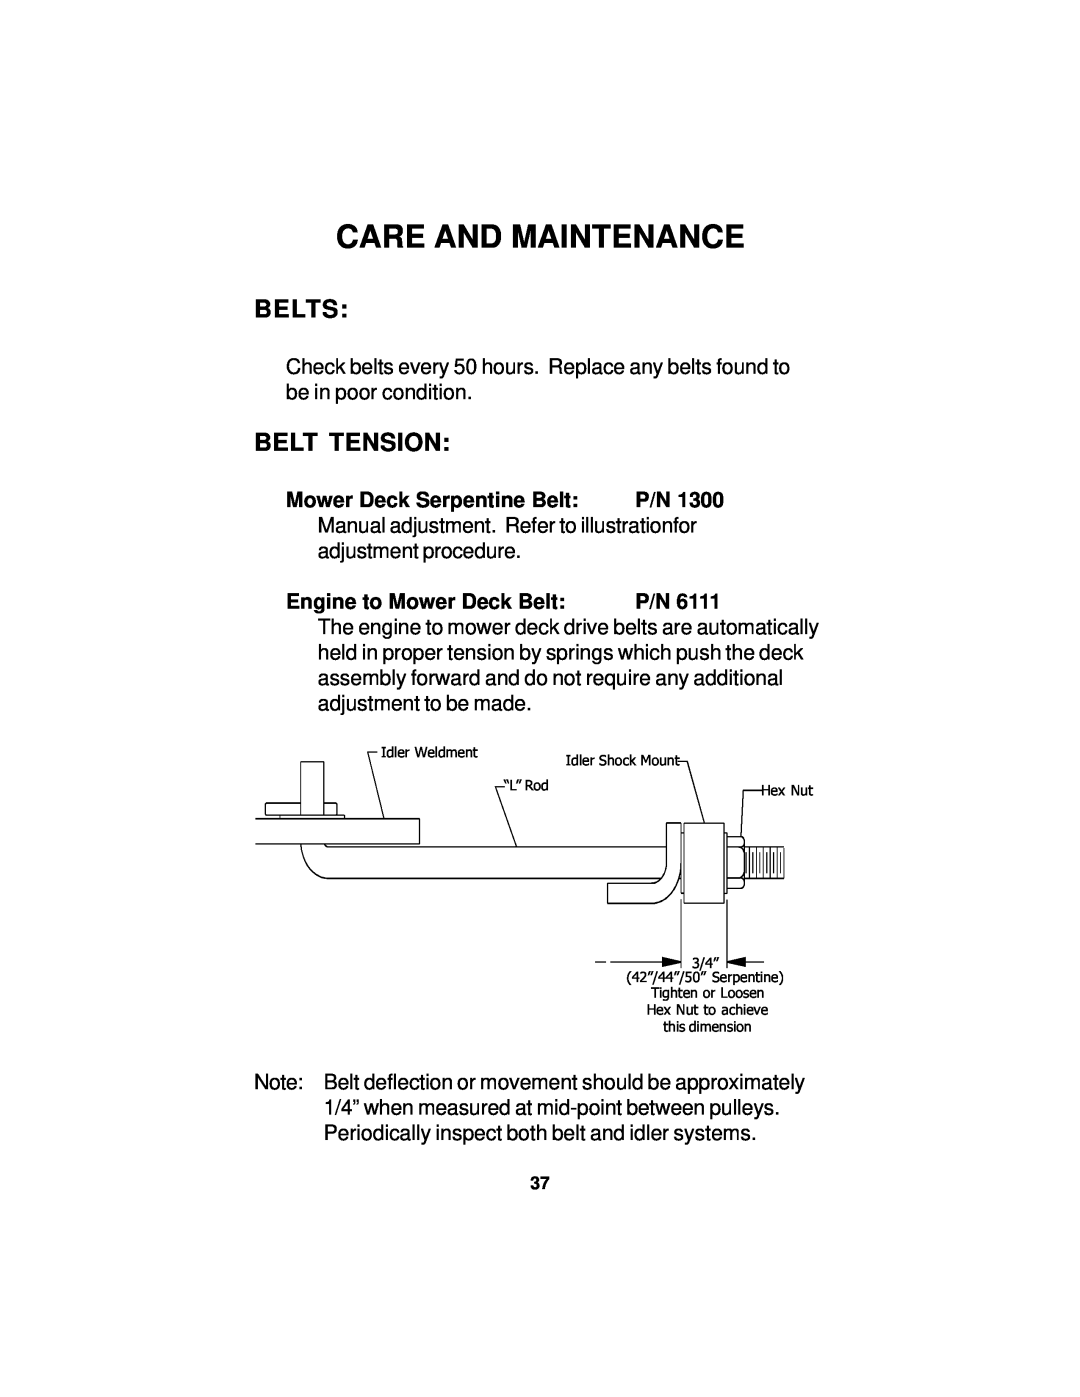 Dixon 18124-0804 manual Belts, Belt Tension, Care And Maintenance, Mower Deck Serpentine Belt, adjustment procedure 